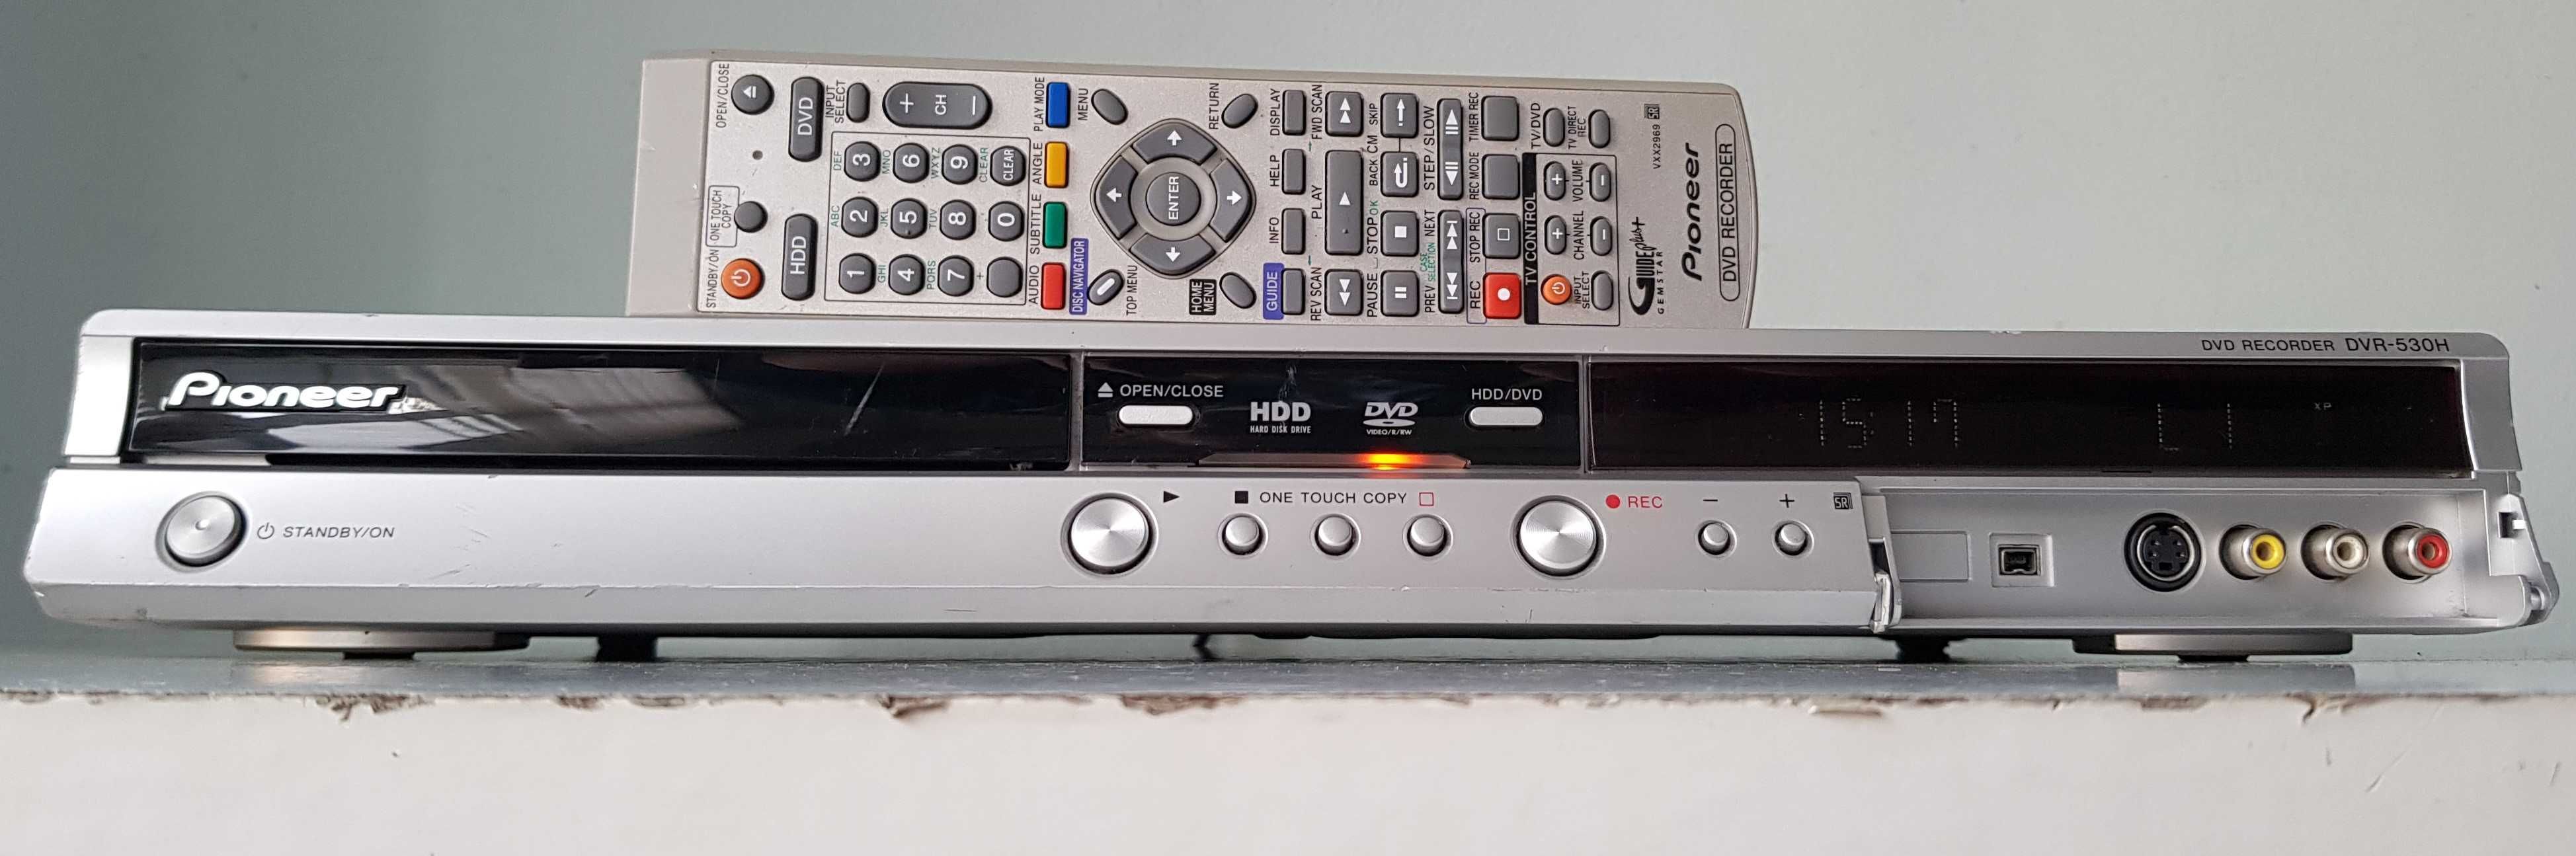 Pioneer DVR 530 H S dvd recorder cu HDD 160 GB muzica arta colectie